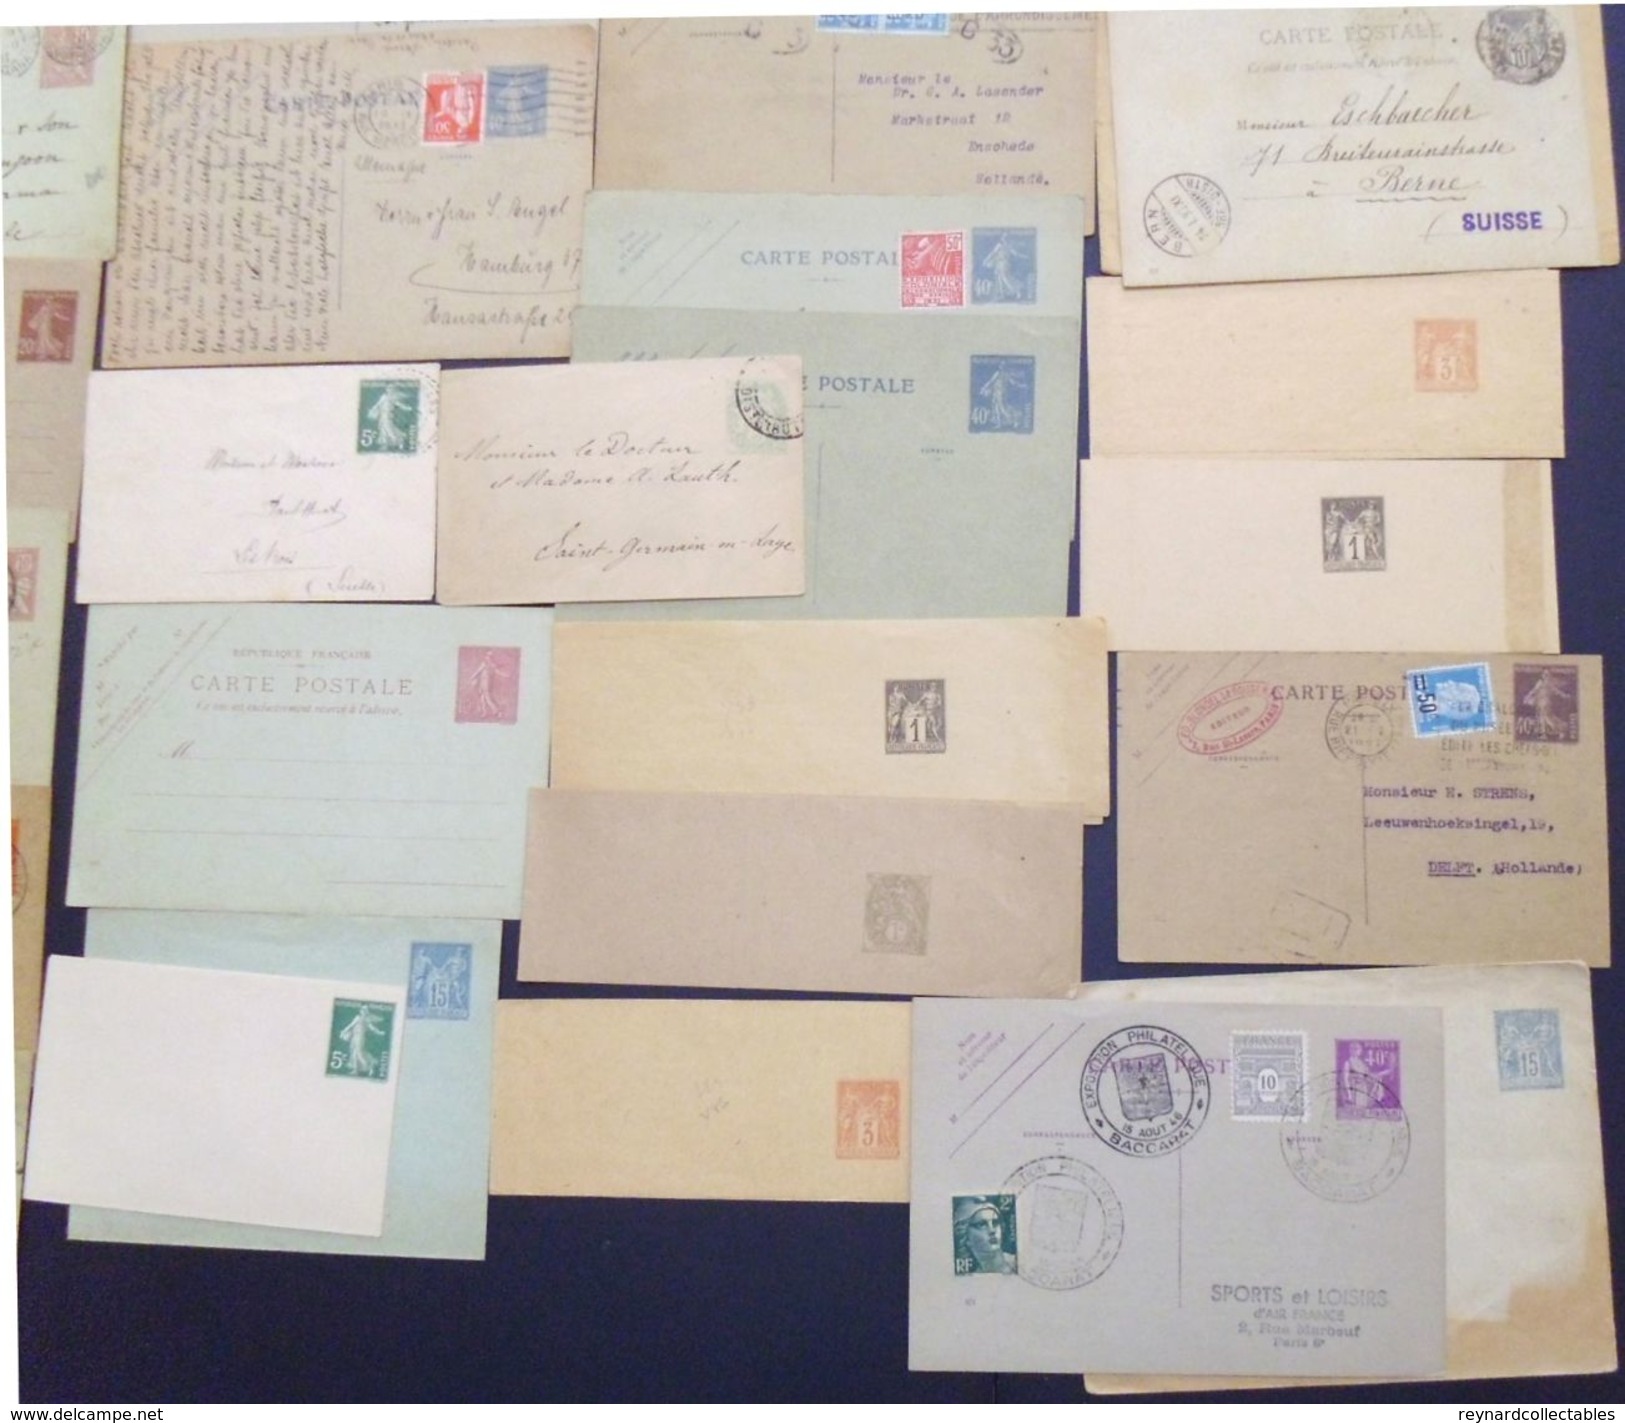 France v.fine collection postal stat/entier postale(250) 19th/20thC inc cards,envelope,reply cards. 1925 Paris++